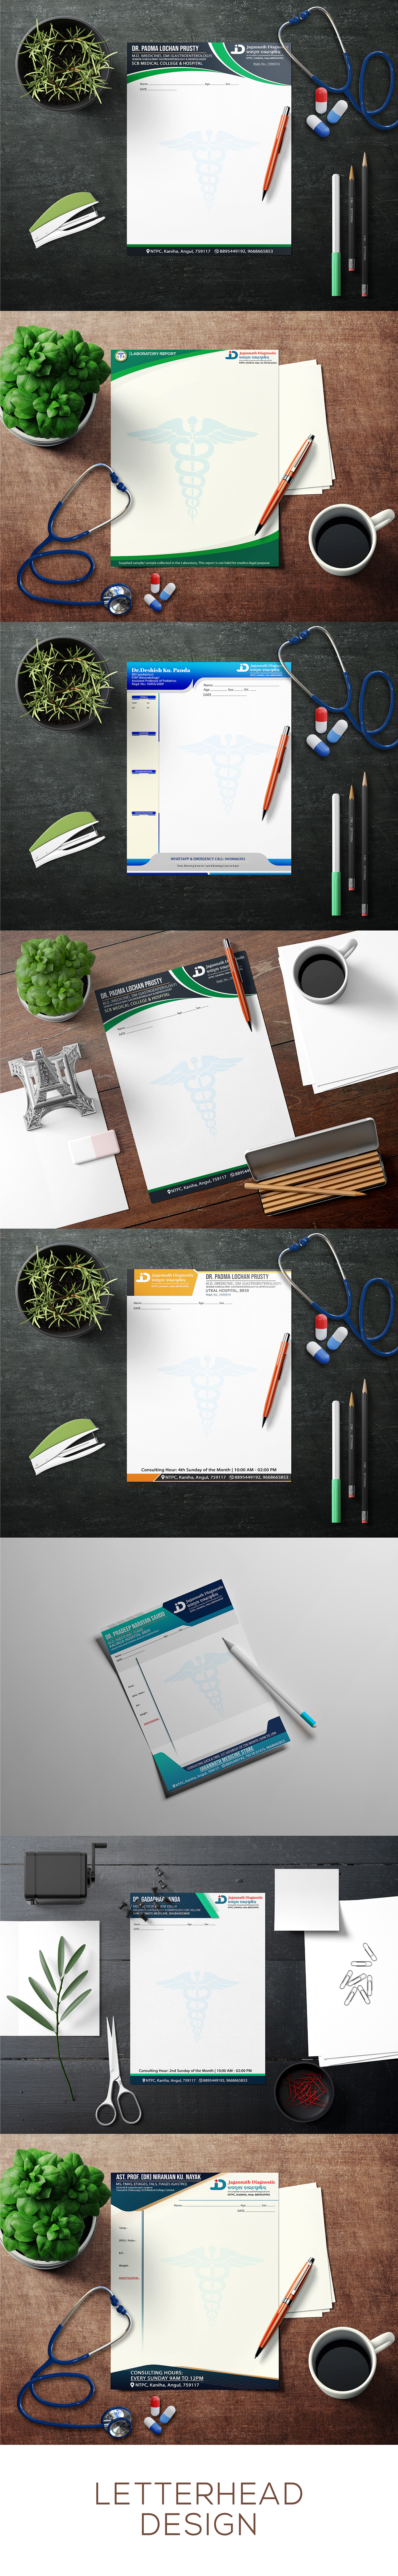 letterhead branding  brand identity Letterhead Design letterheads Letterhead template letterheaddesign Stationery